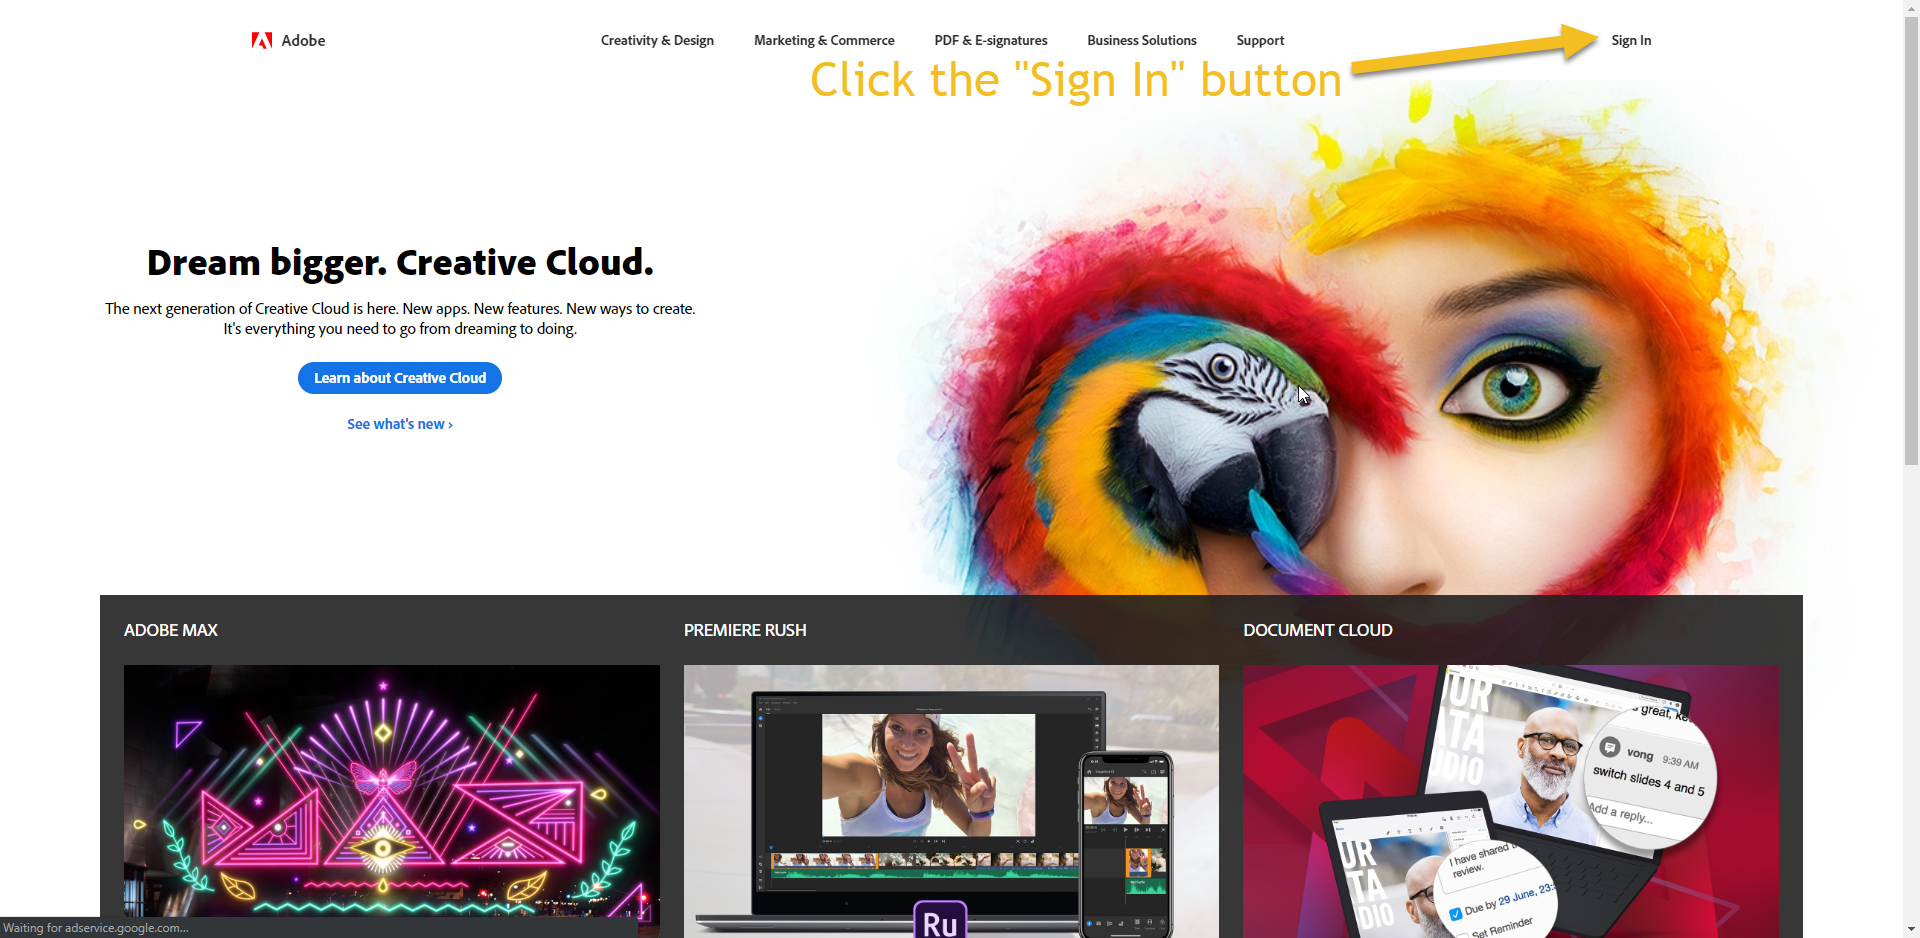 Adobe Creative Cloud Set Up Its Help Desk